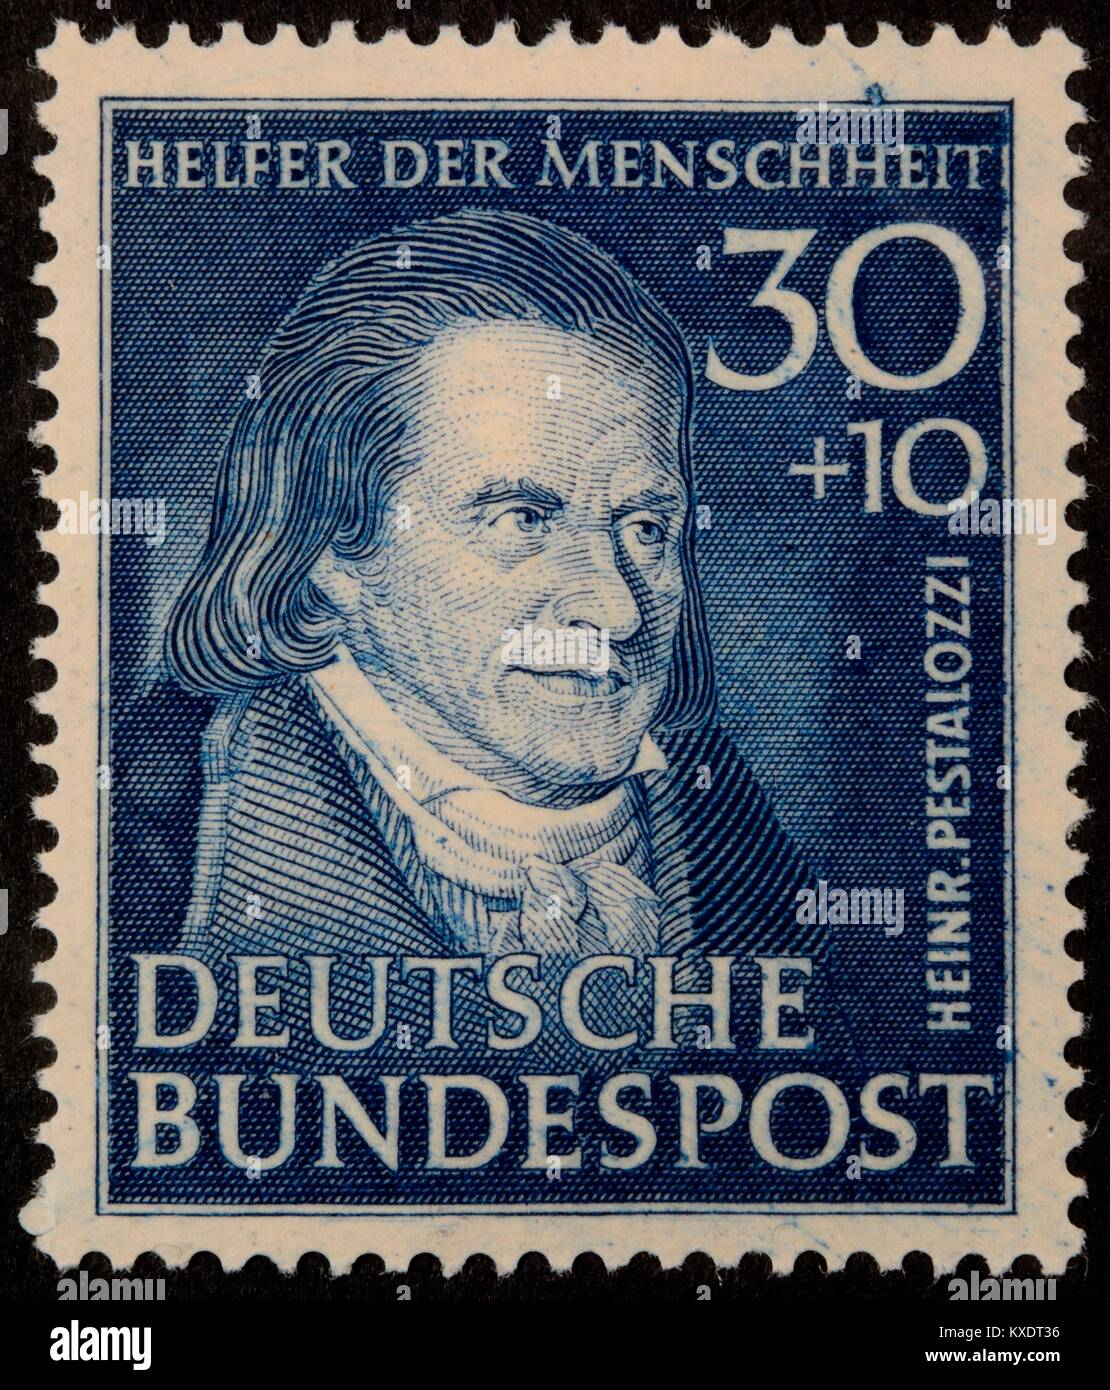 Heinrich Pestalozzi, a Swiss pedagogue and educational reformer, portrait on a German stamp 1951 Stock Photo